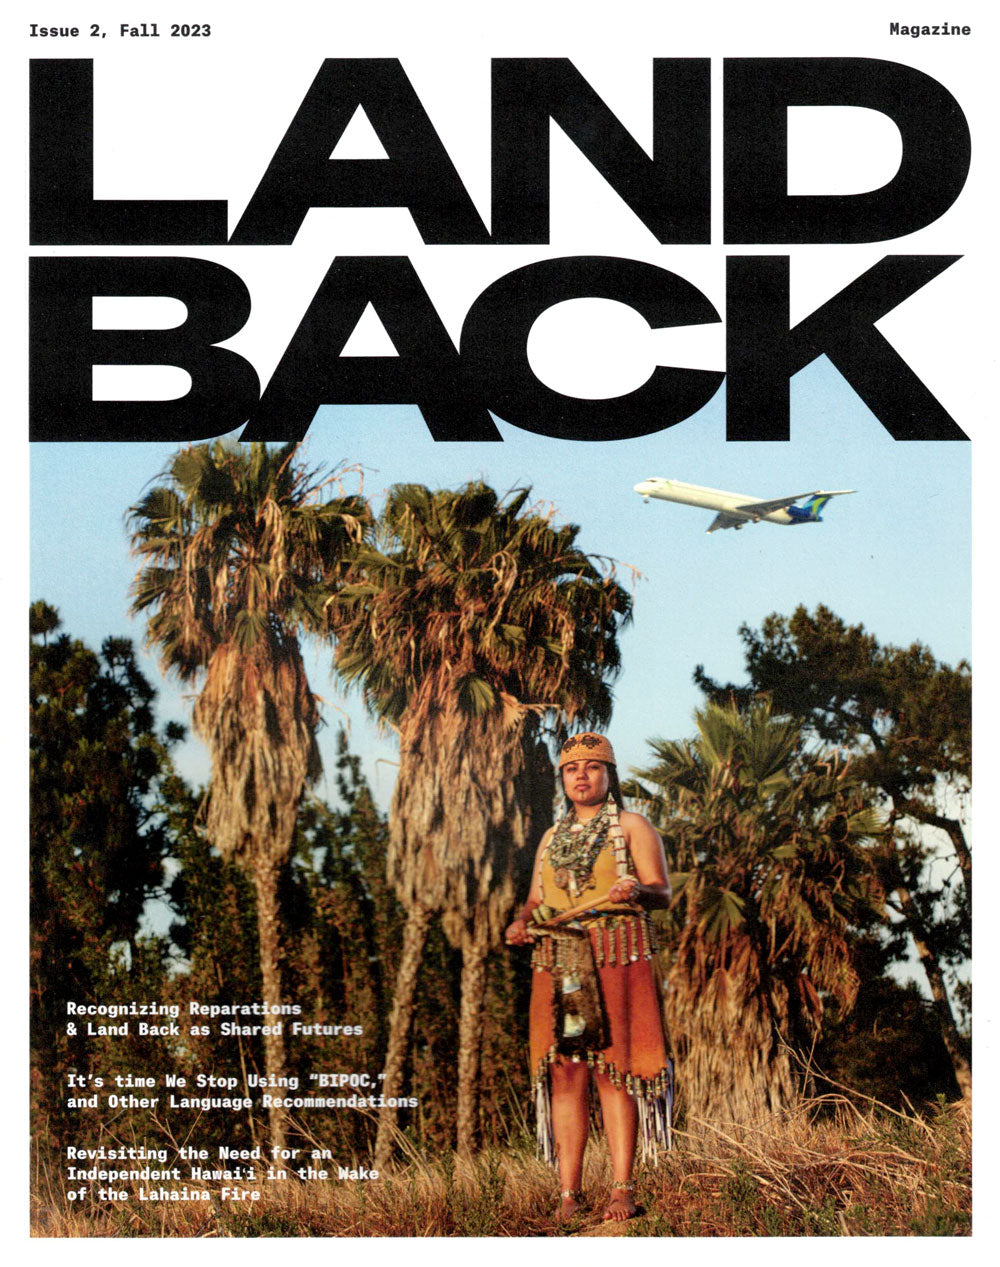 LANDBACK Magazine Issue 2, Fall 2023